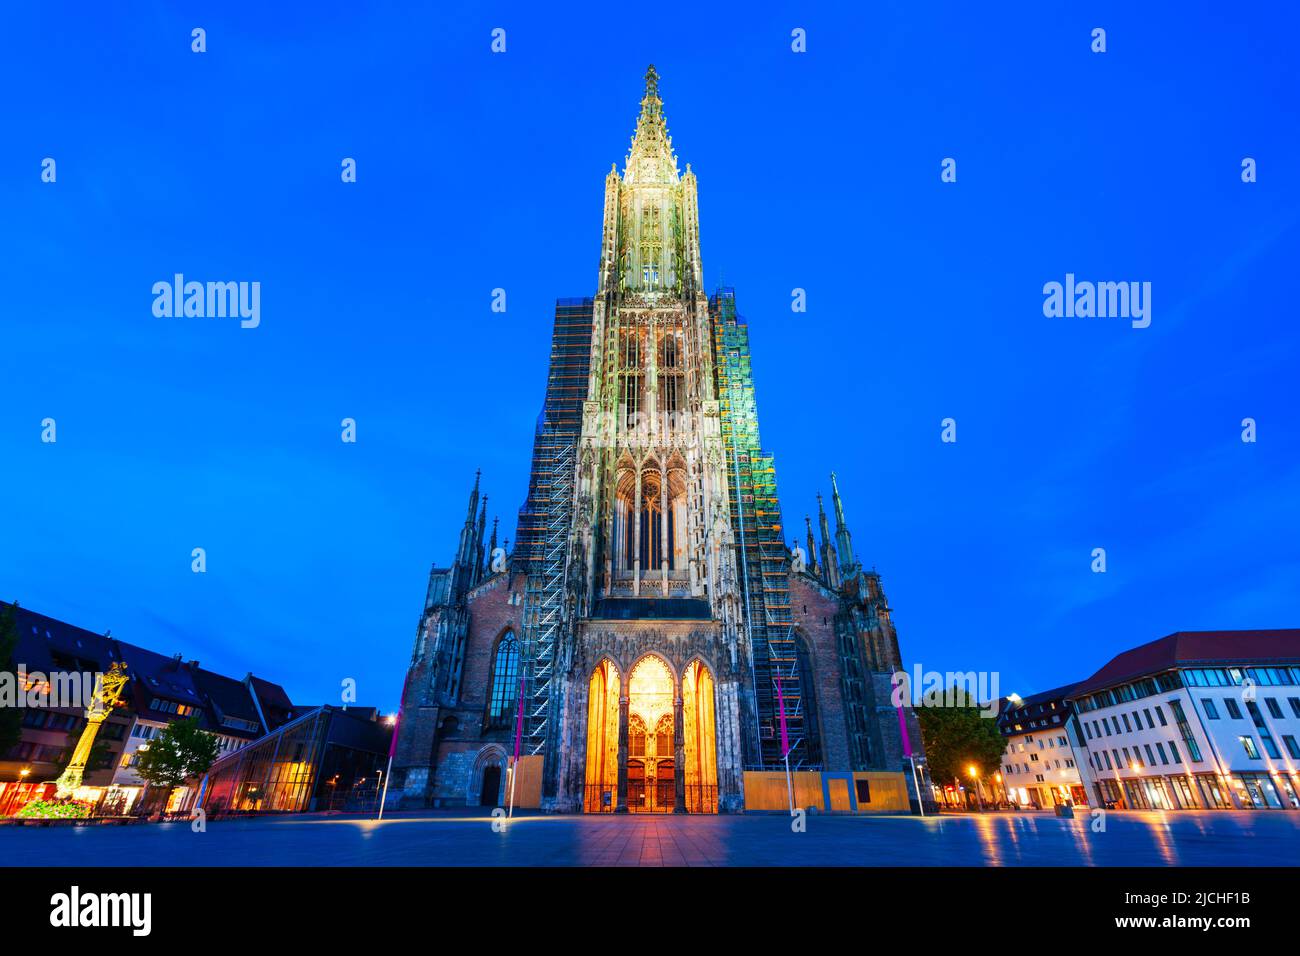 Ulm Minster o Ulmer Munster Cathedral è una chiesa luterana situata a Ulm, in Germania. Attualmente è la chiesa più alta del mondo. Foto Stock